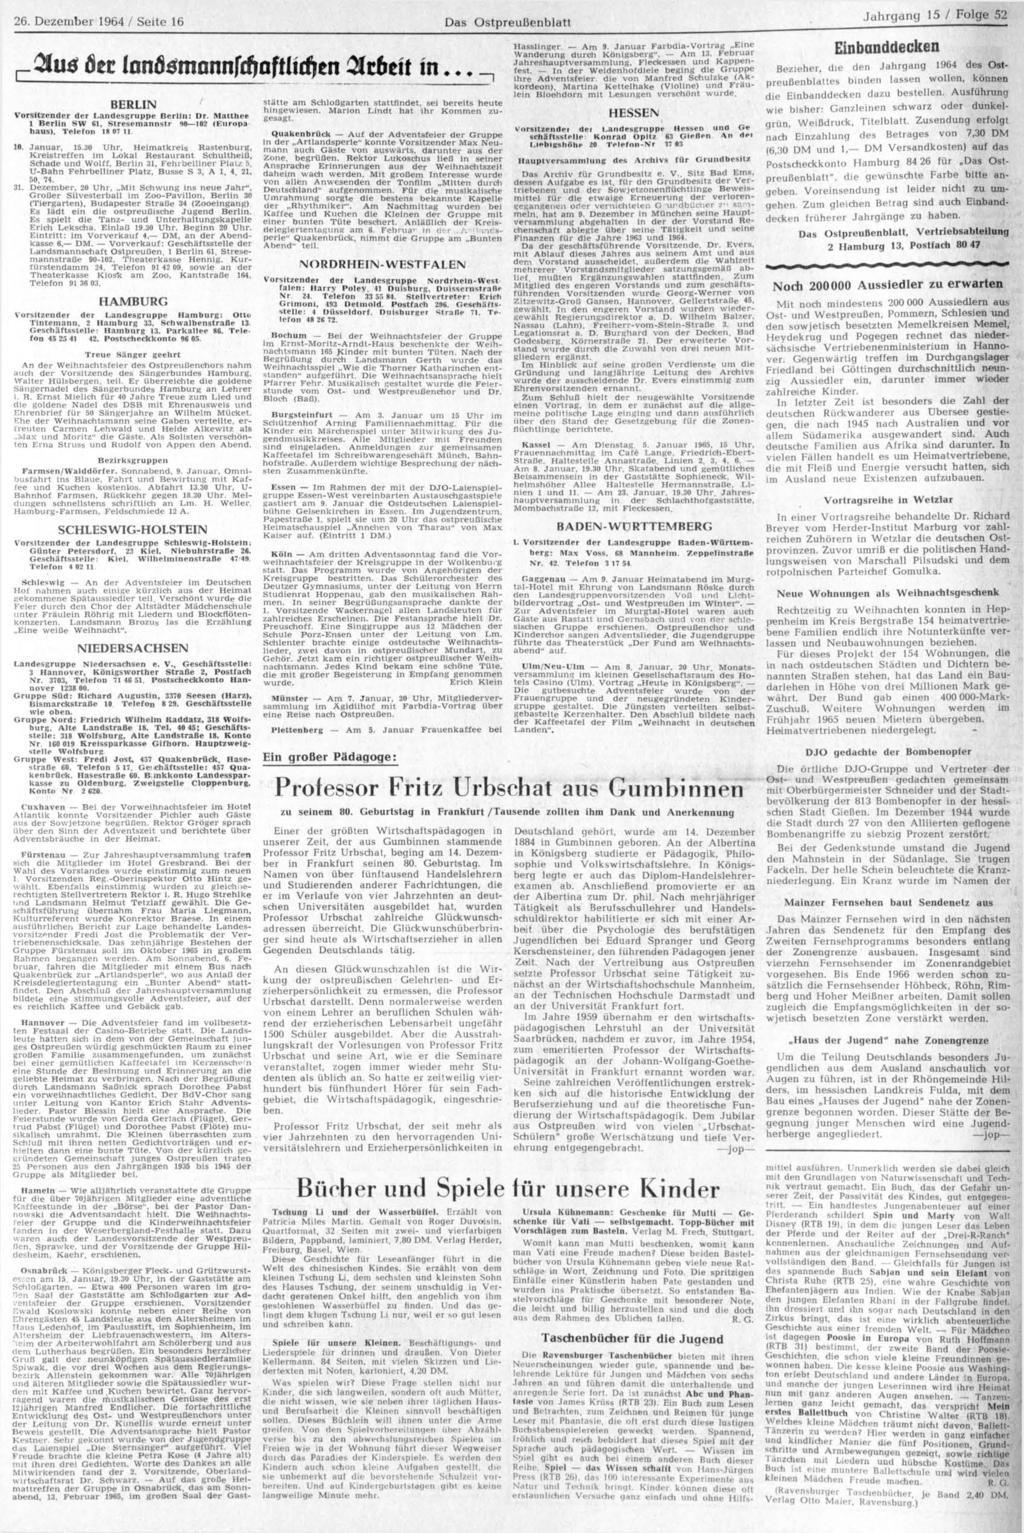 26. Dezember 1964 / Seite 16 Das Ostpreußenblatt Jahrgang 15 / Folge 52 2!u$ Ott idnöömonnfdynftlit^en A r b e i t i n.. LZ BERLIN Vorsitzender der Landesgruppe Berlin: Dr.